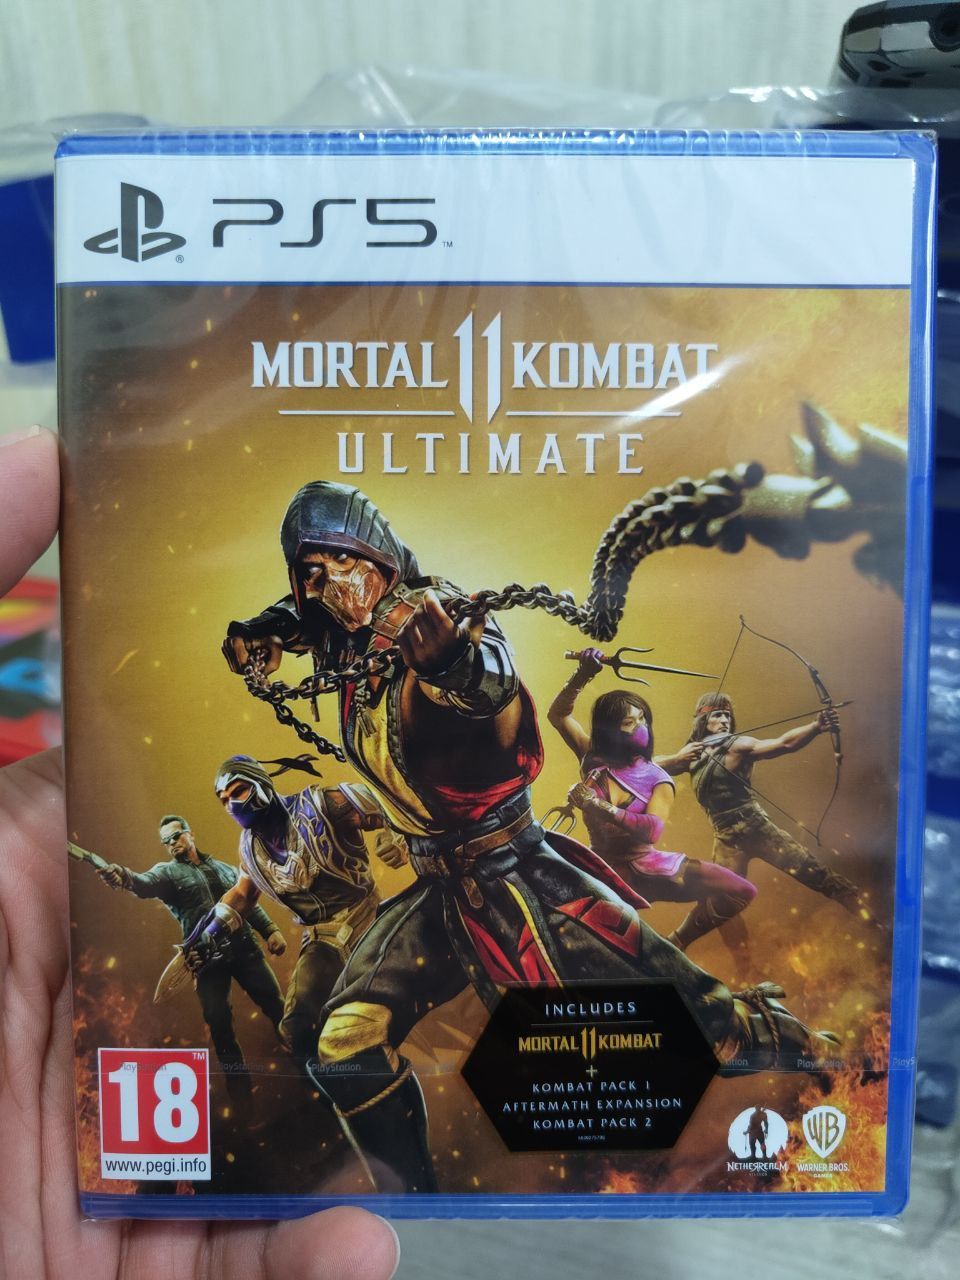 Mortal Kombat 11 Grand theft afto 5 Playstation 5